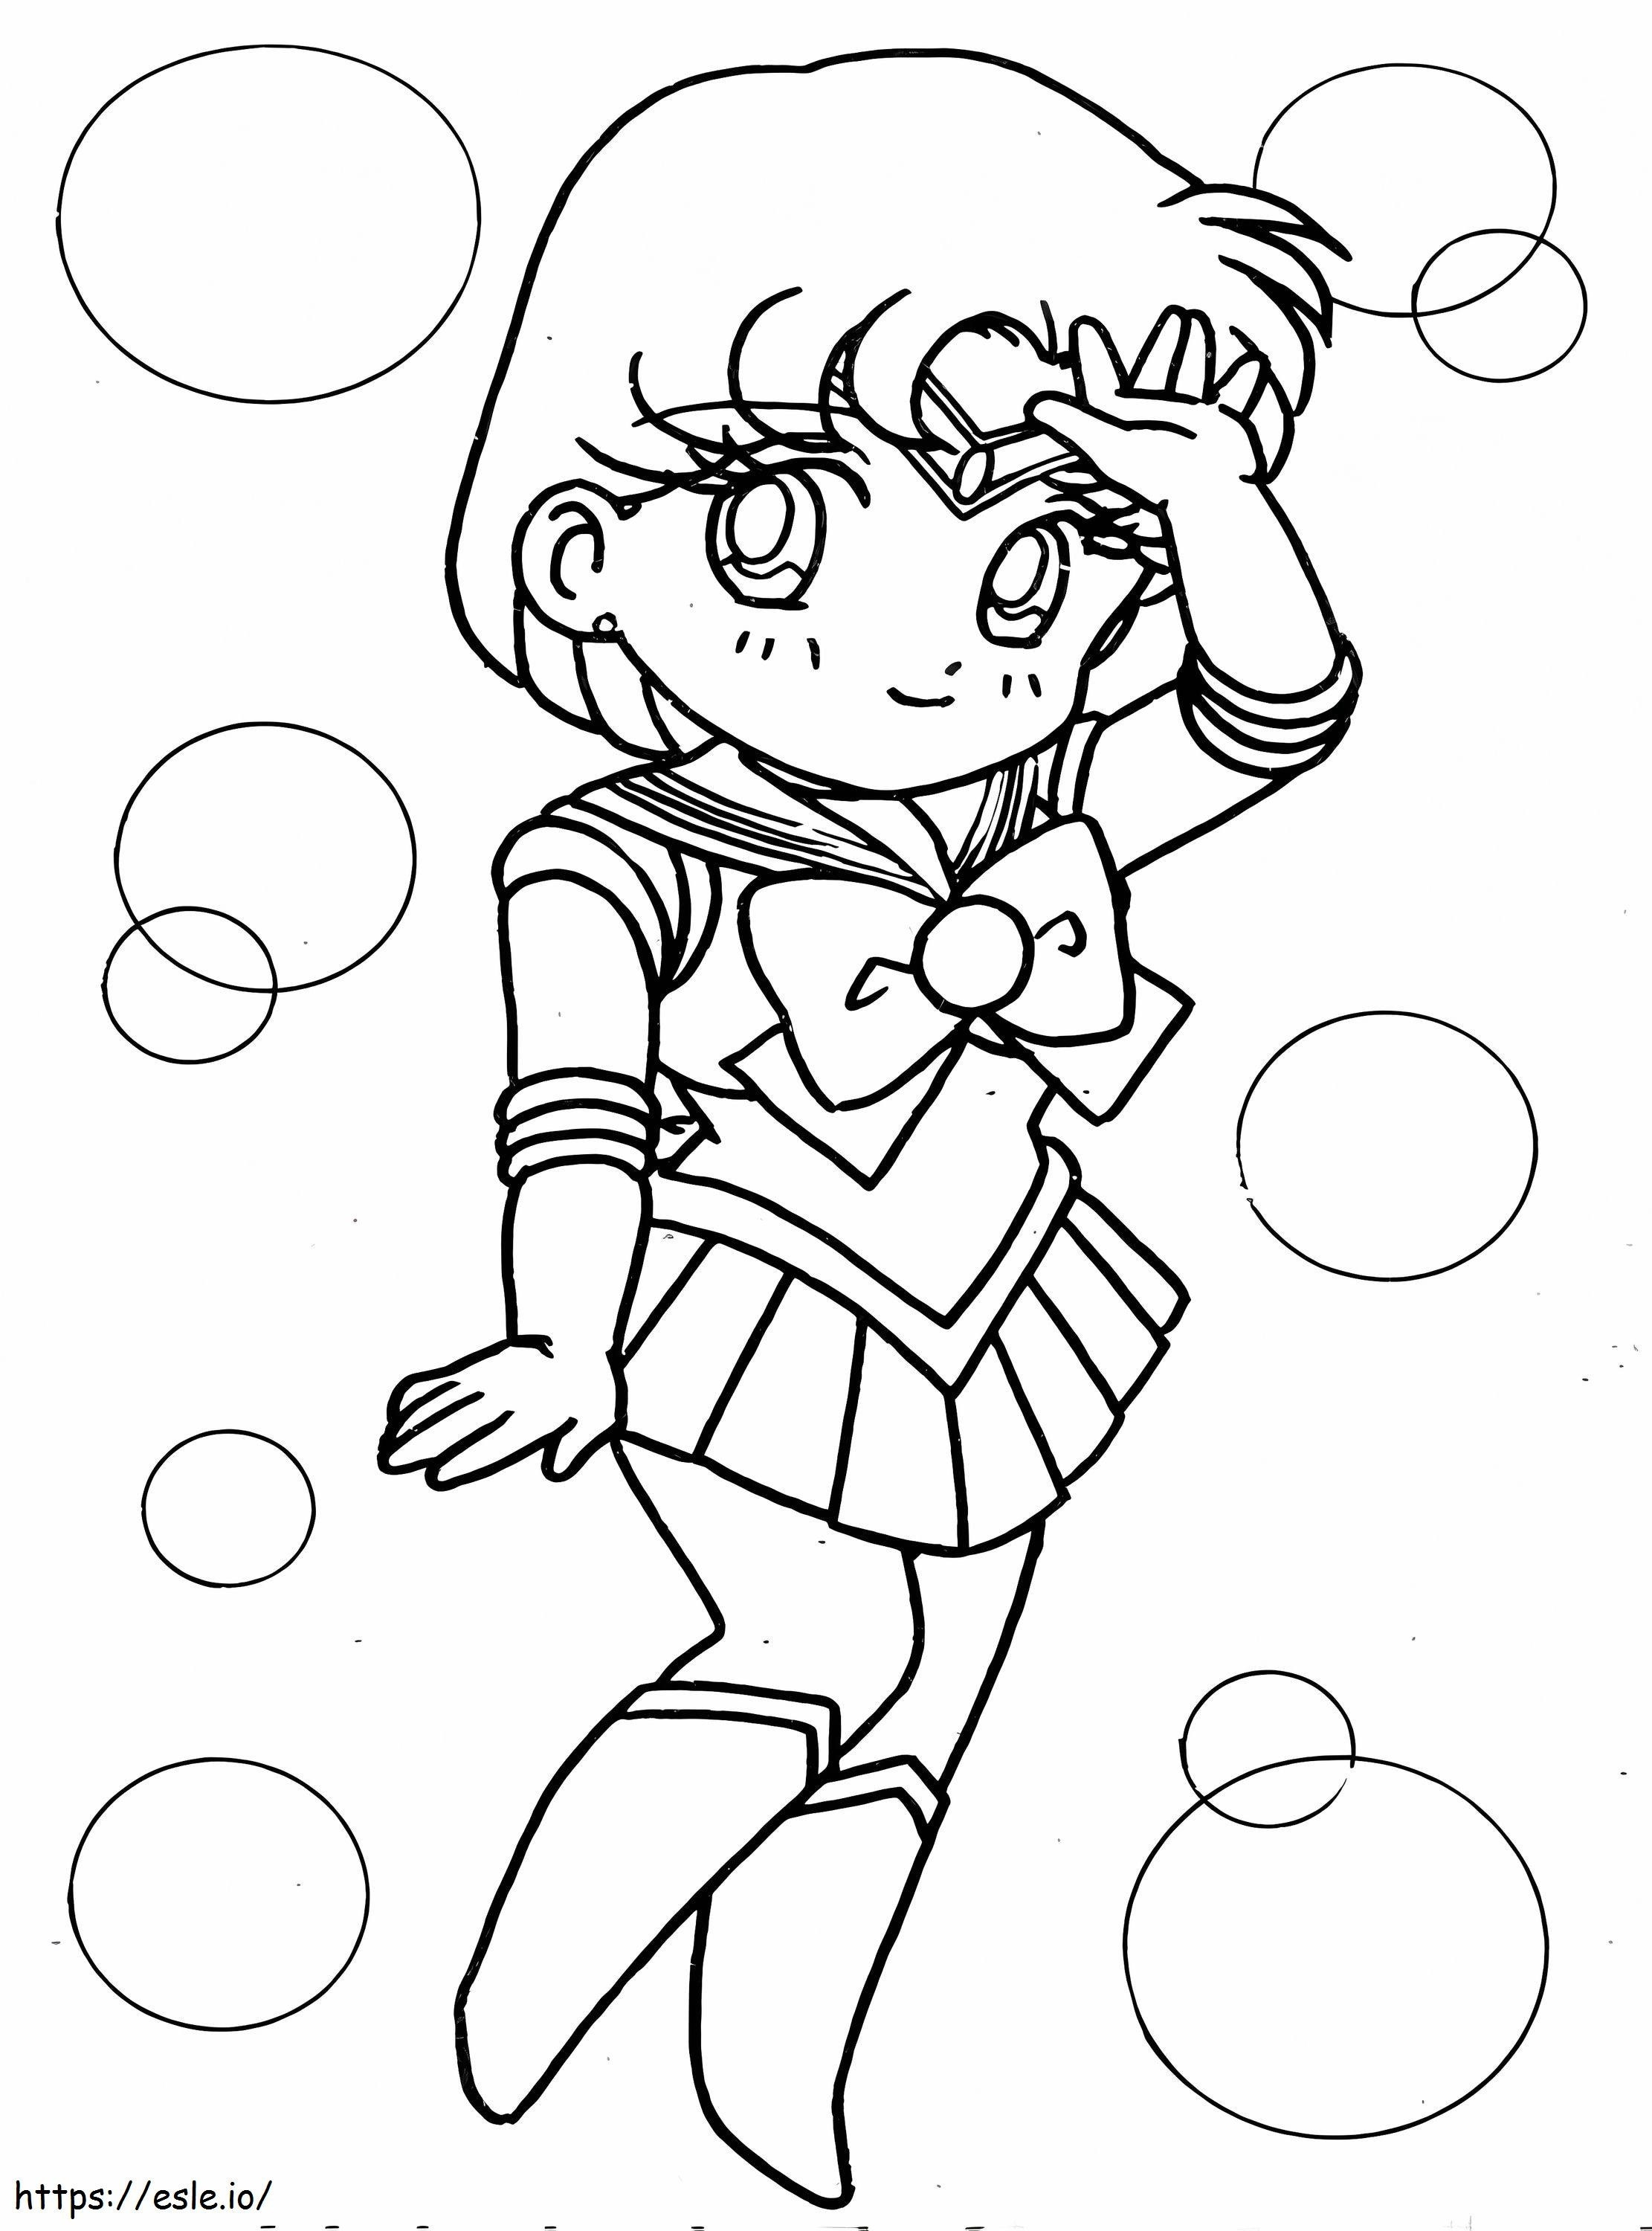 Chibi Sailor Mercury coloring page